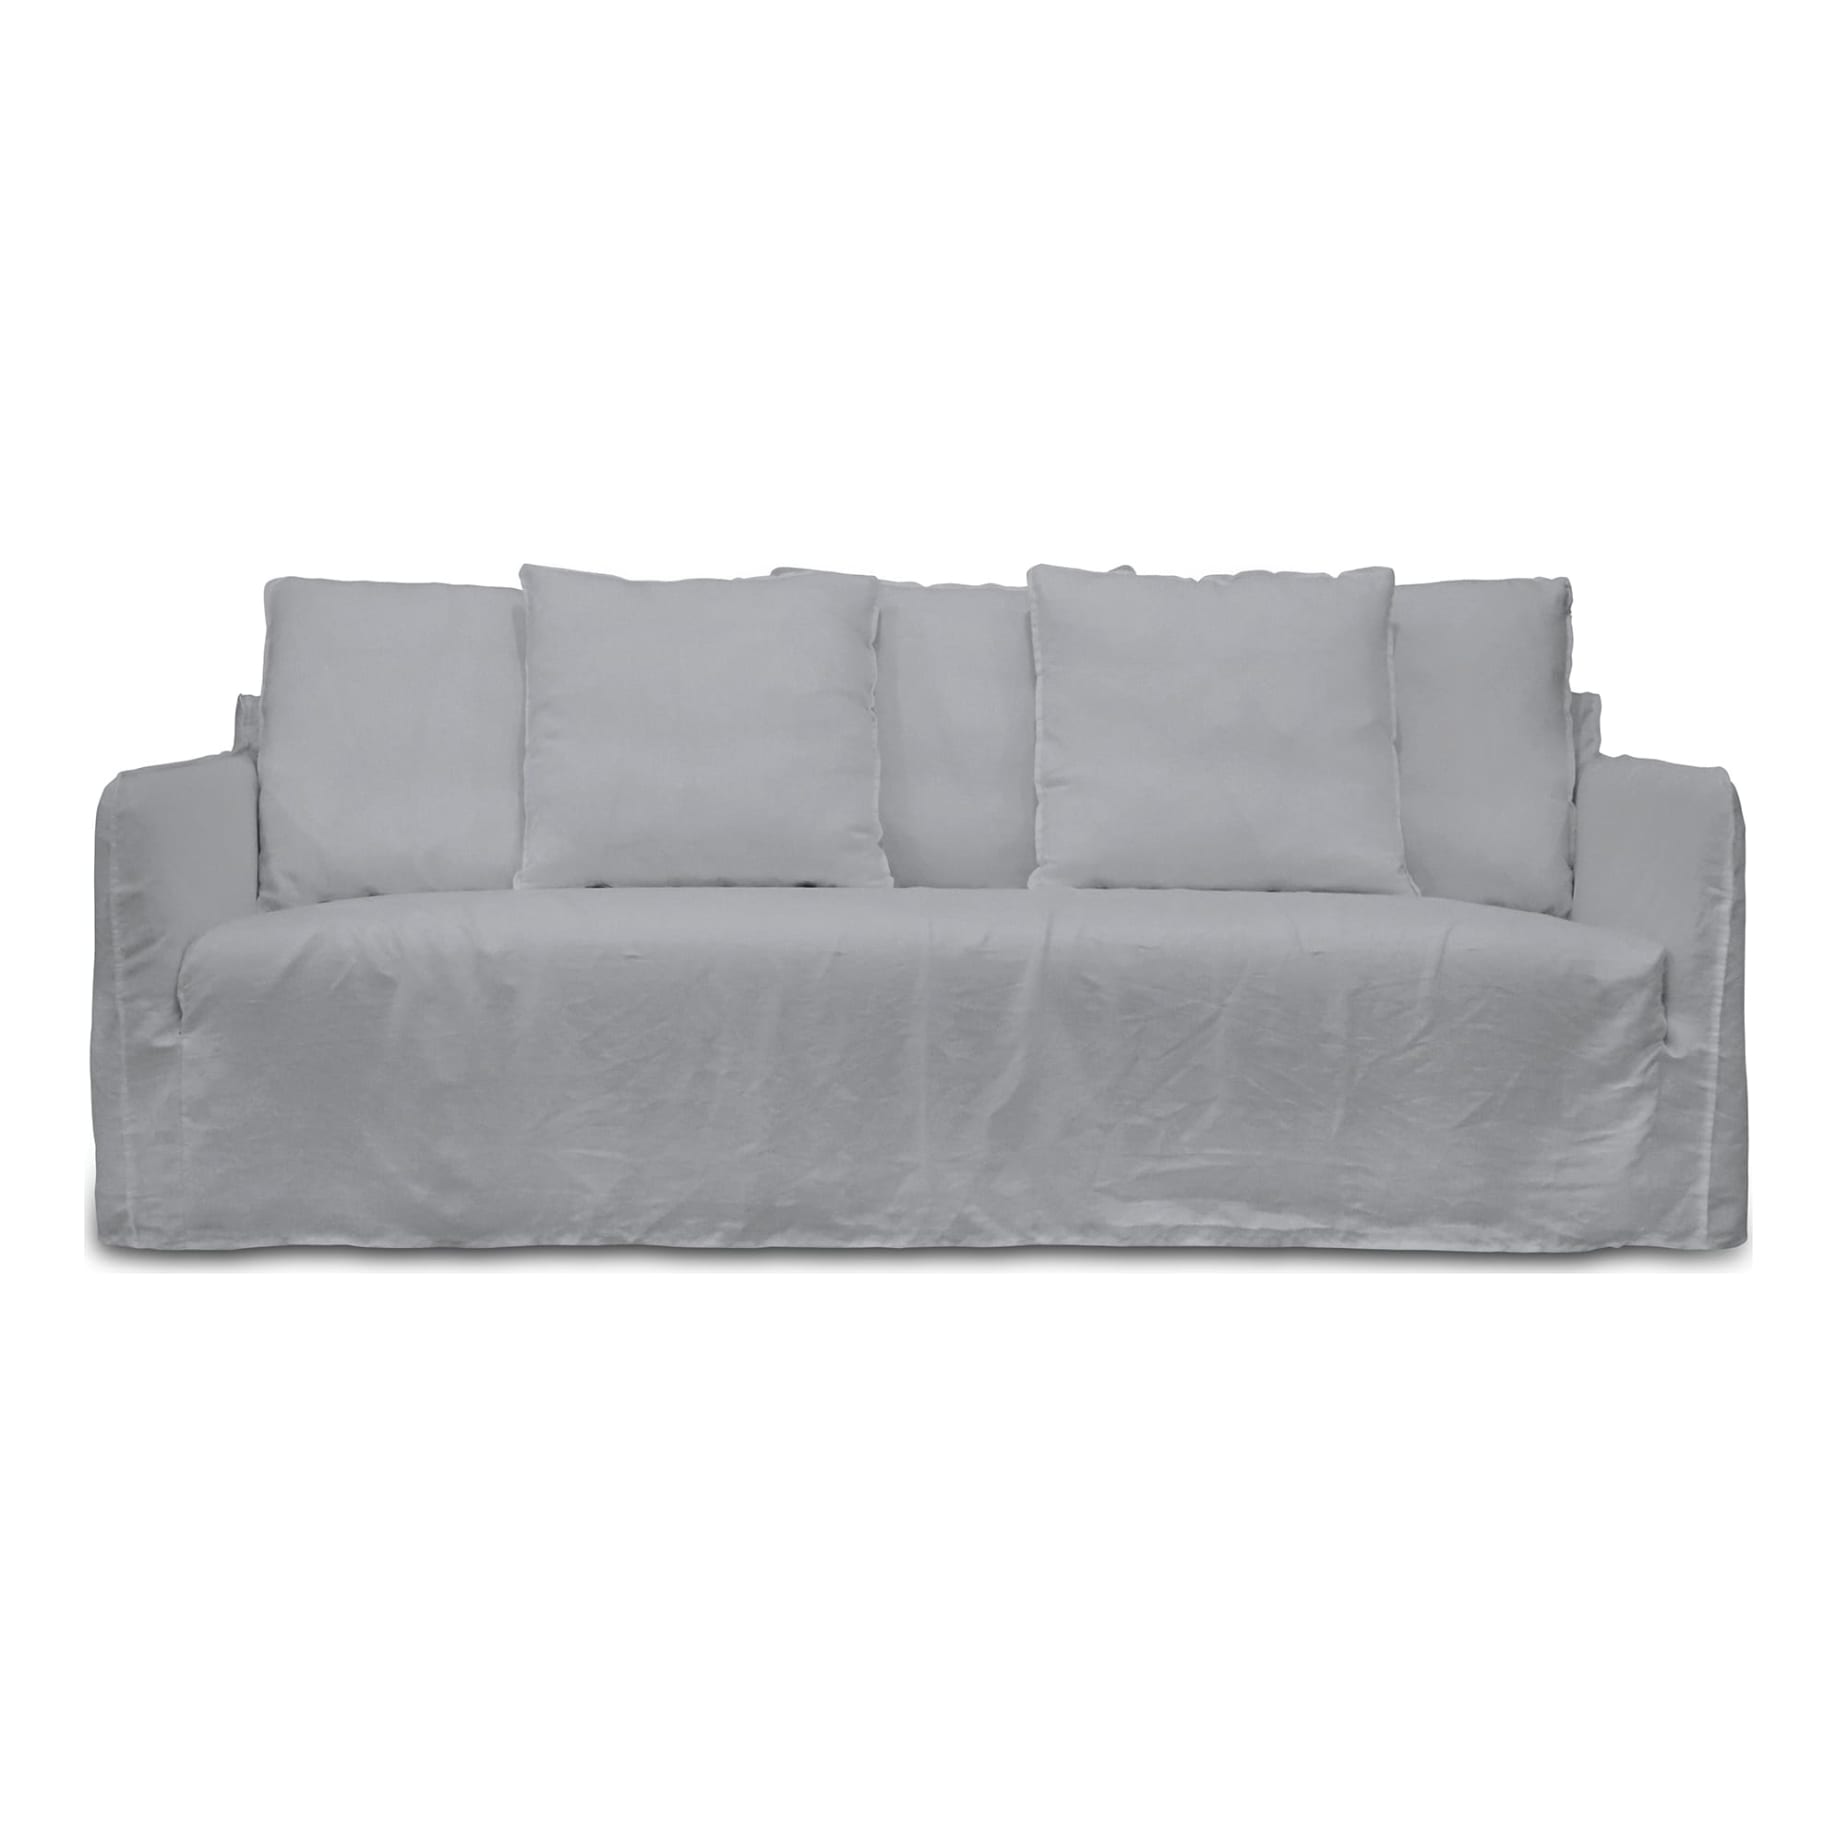 Whitehaven 2.5 Seater Sofa in Skye Light Grey